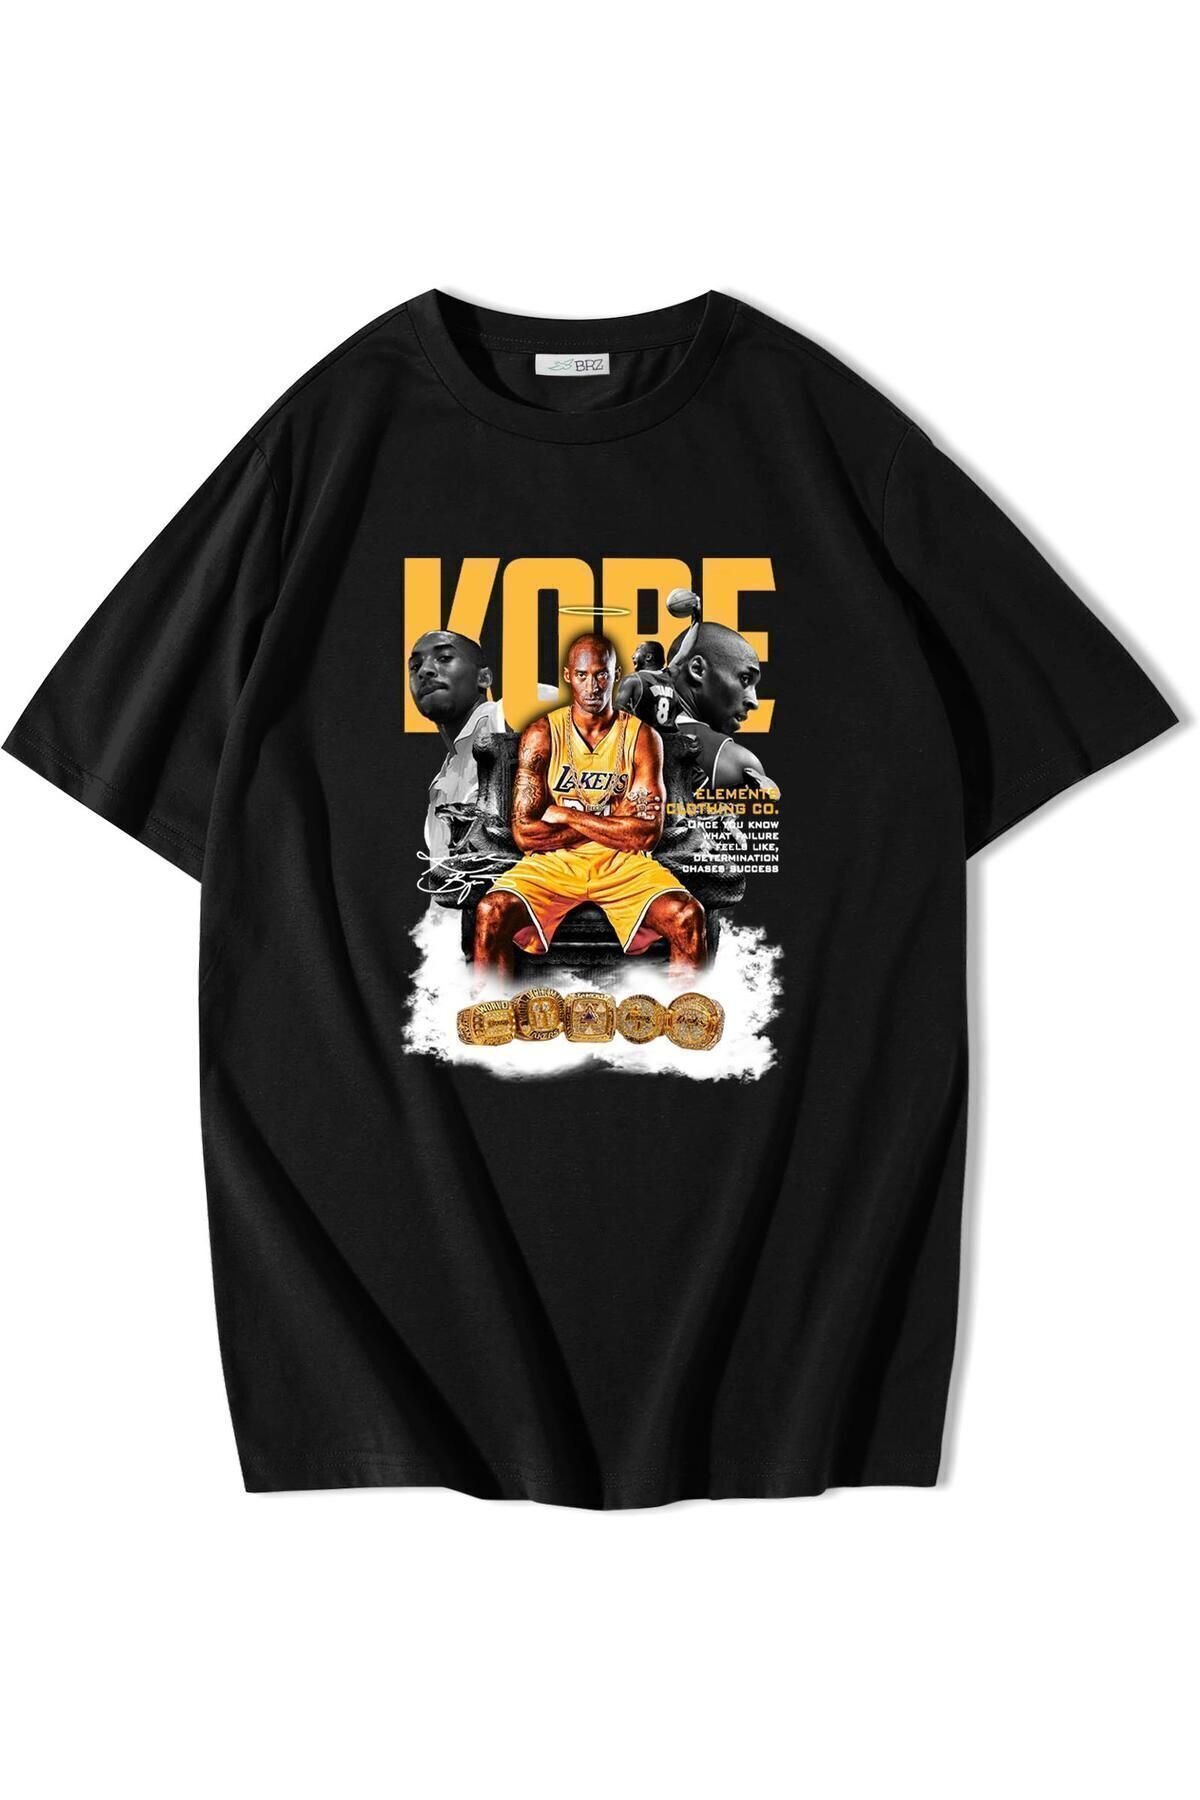 BRZ COLLECTION Unisex Oversize Kobe Bryant T-shirt